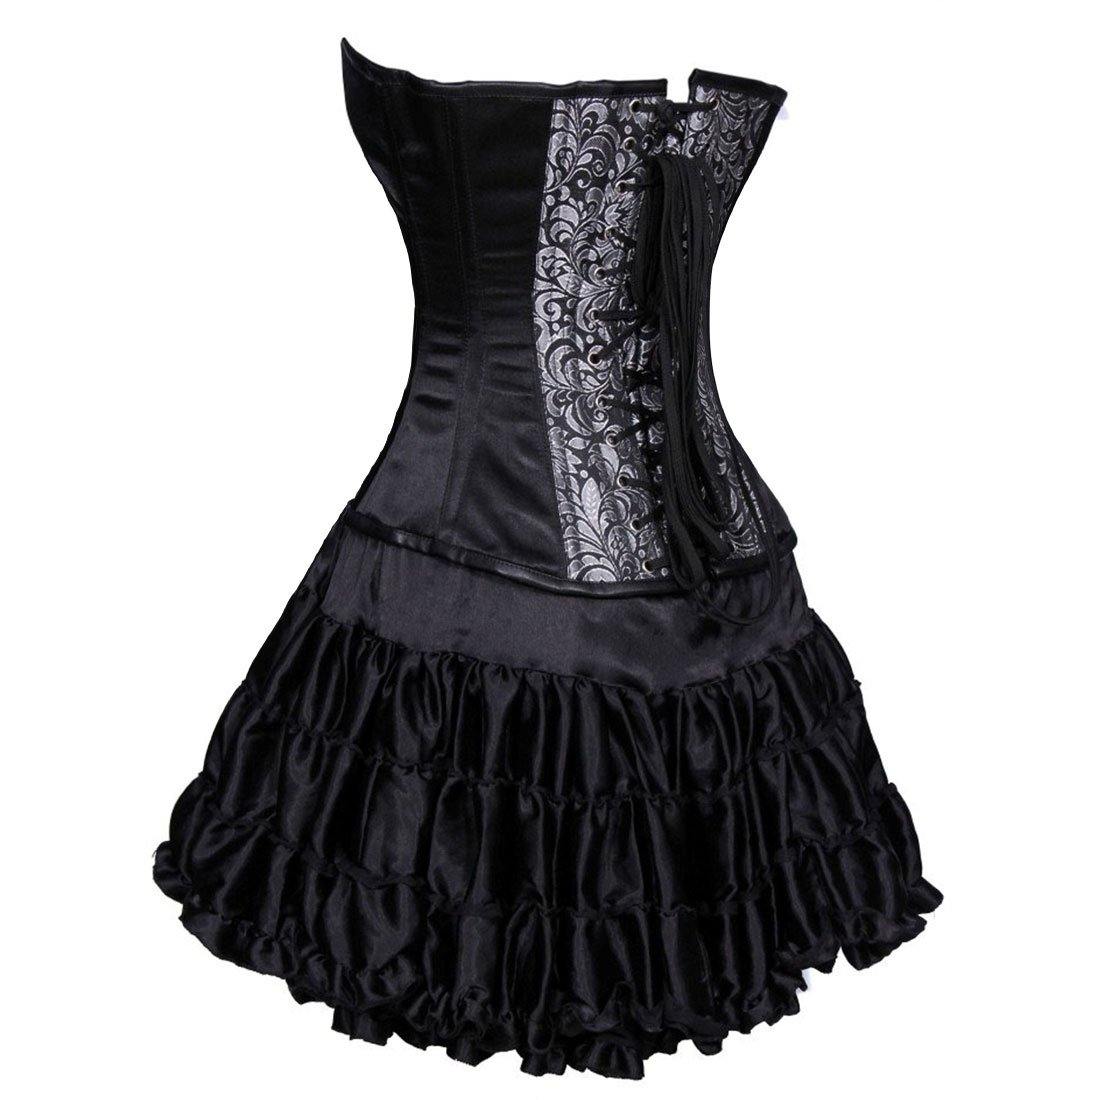 Jagienka Gothic overbust corset dress - Corset Revolution